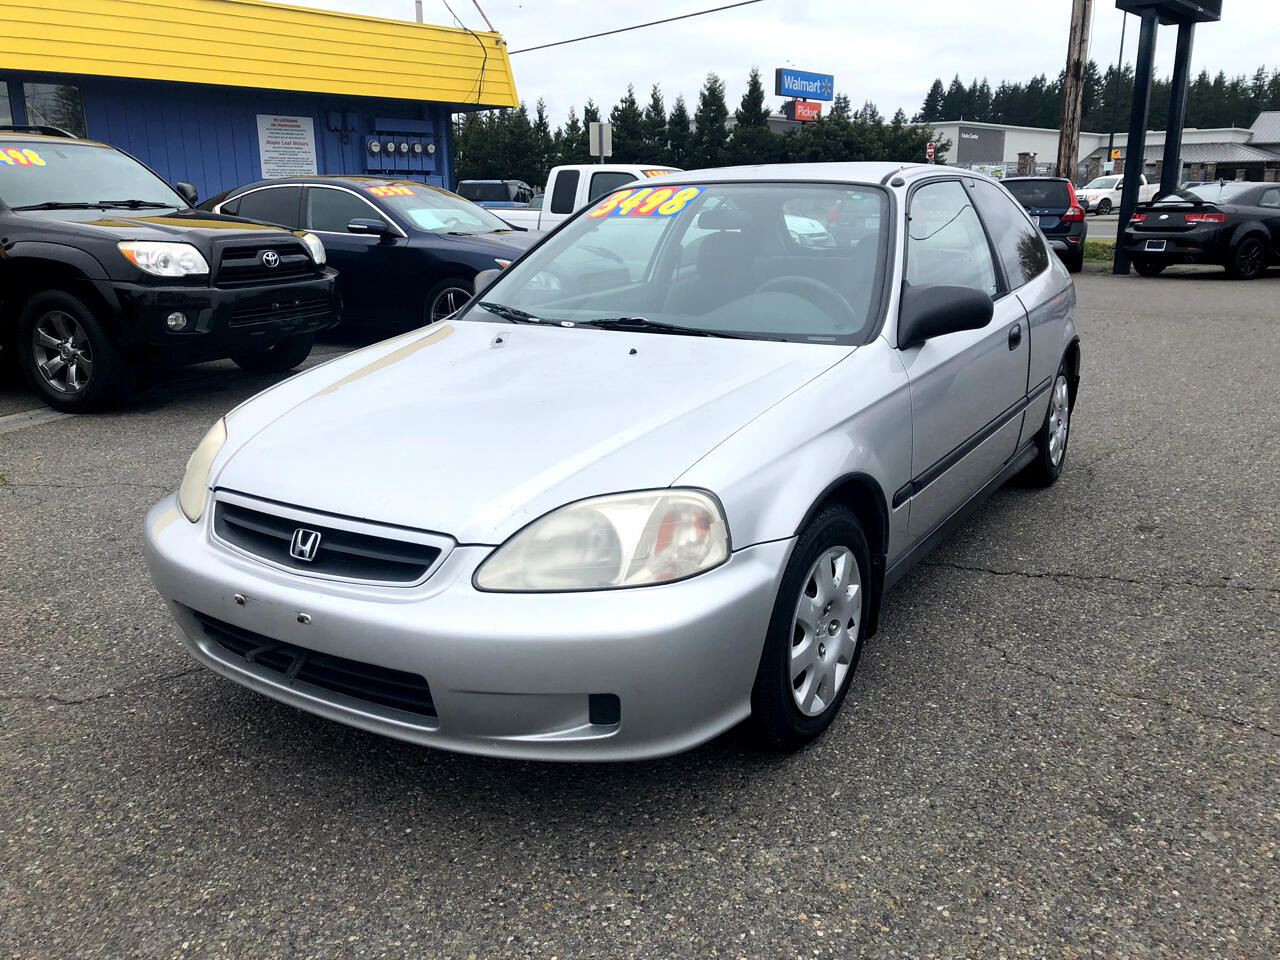 Used 2000 Honda Civic DX hatchback for Sale in Tacoma WA 98409 Maple Leaf Motors